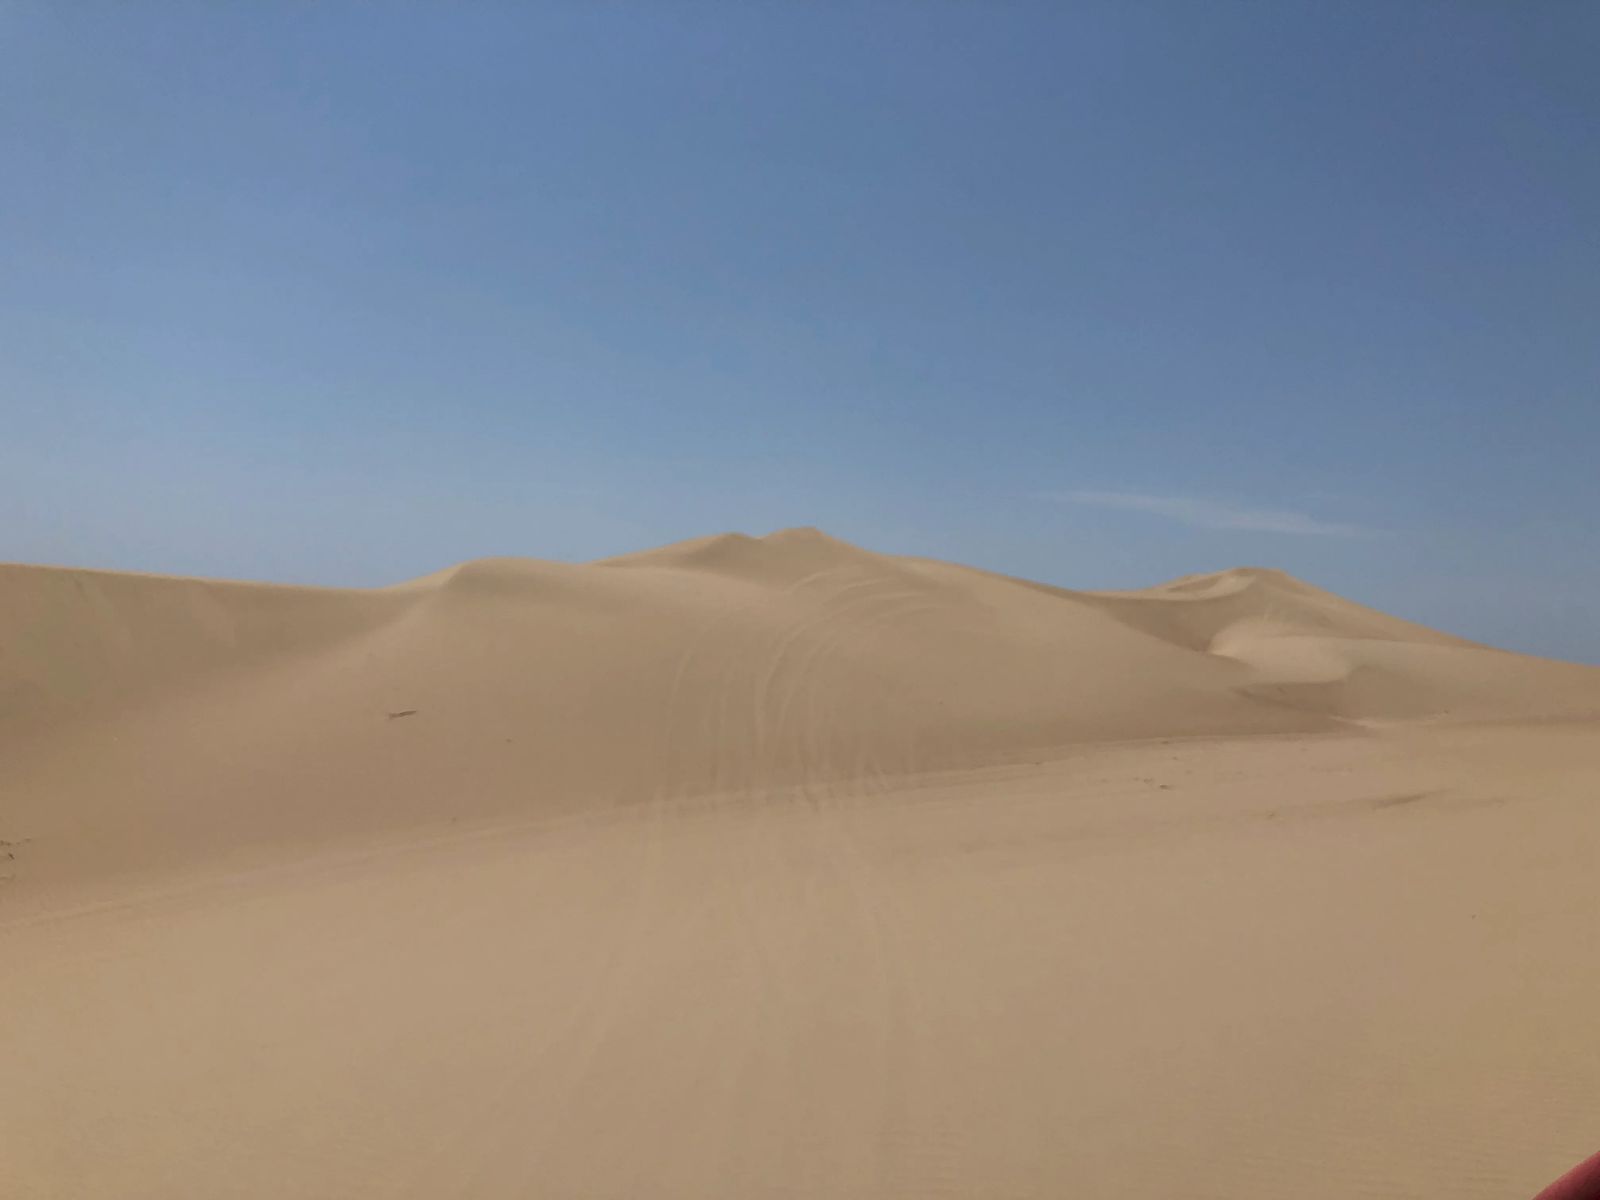 Paracas Desert in Peru - Dune Buggying Adventure - #Peru #Paracasdesertperu #dunebuggy